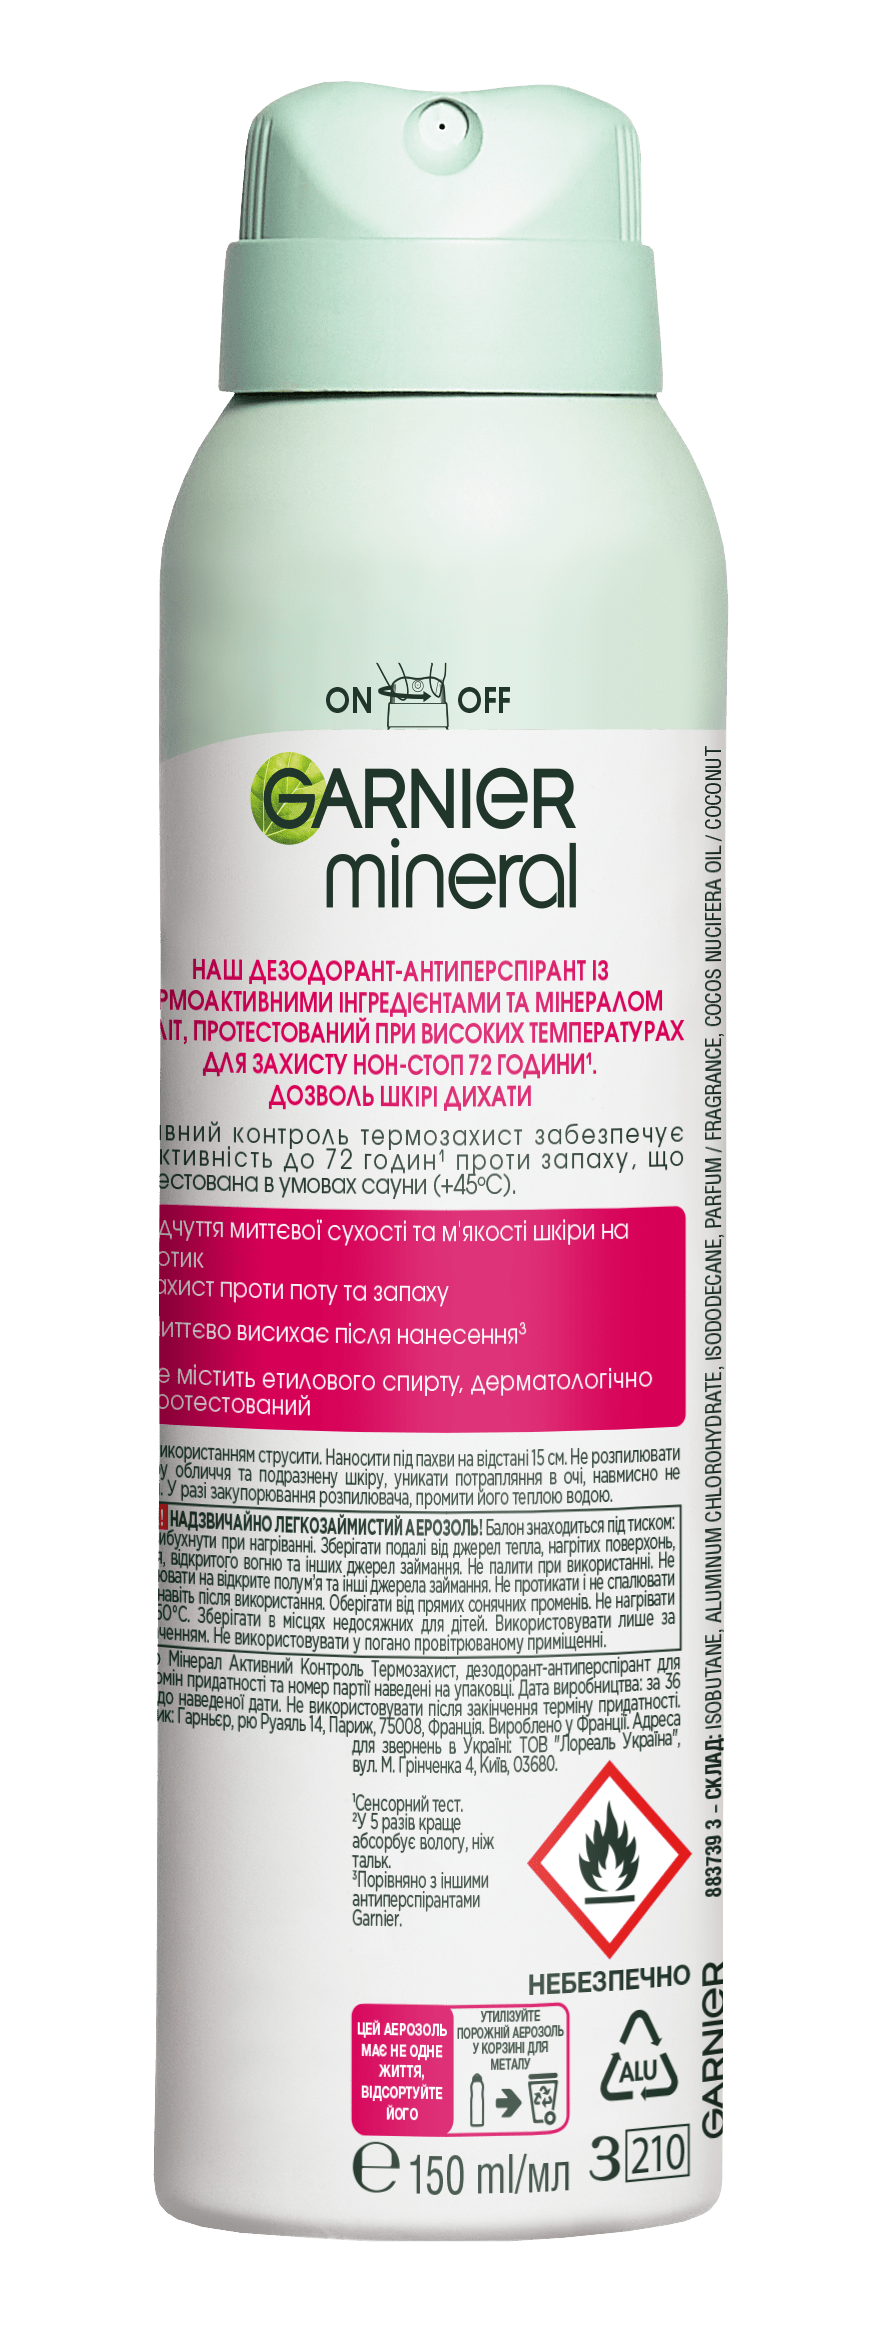 Спрей Дезодорант-Антиперспирант GARNIER Mineral Активный Контроль Термозащита, 150 мл